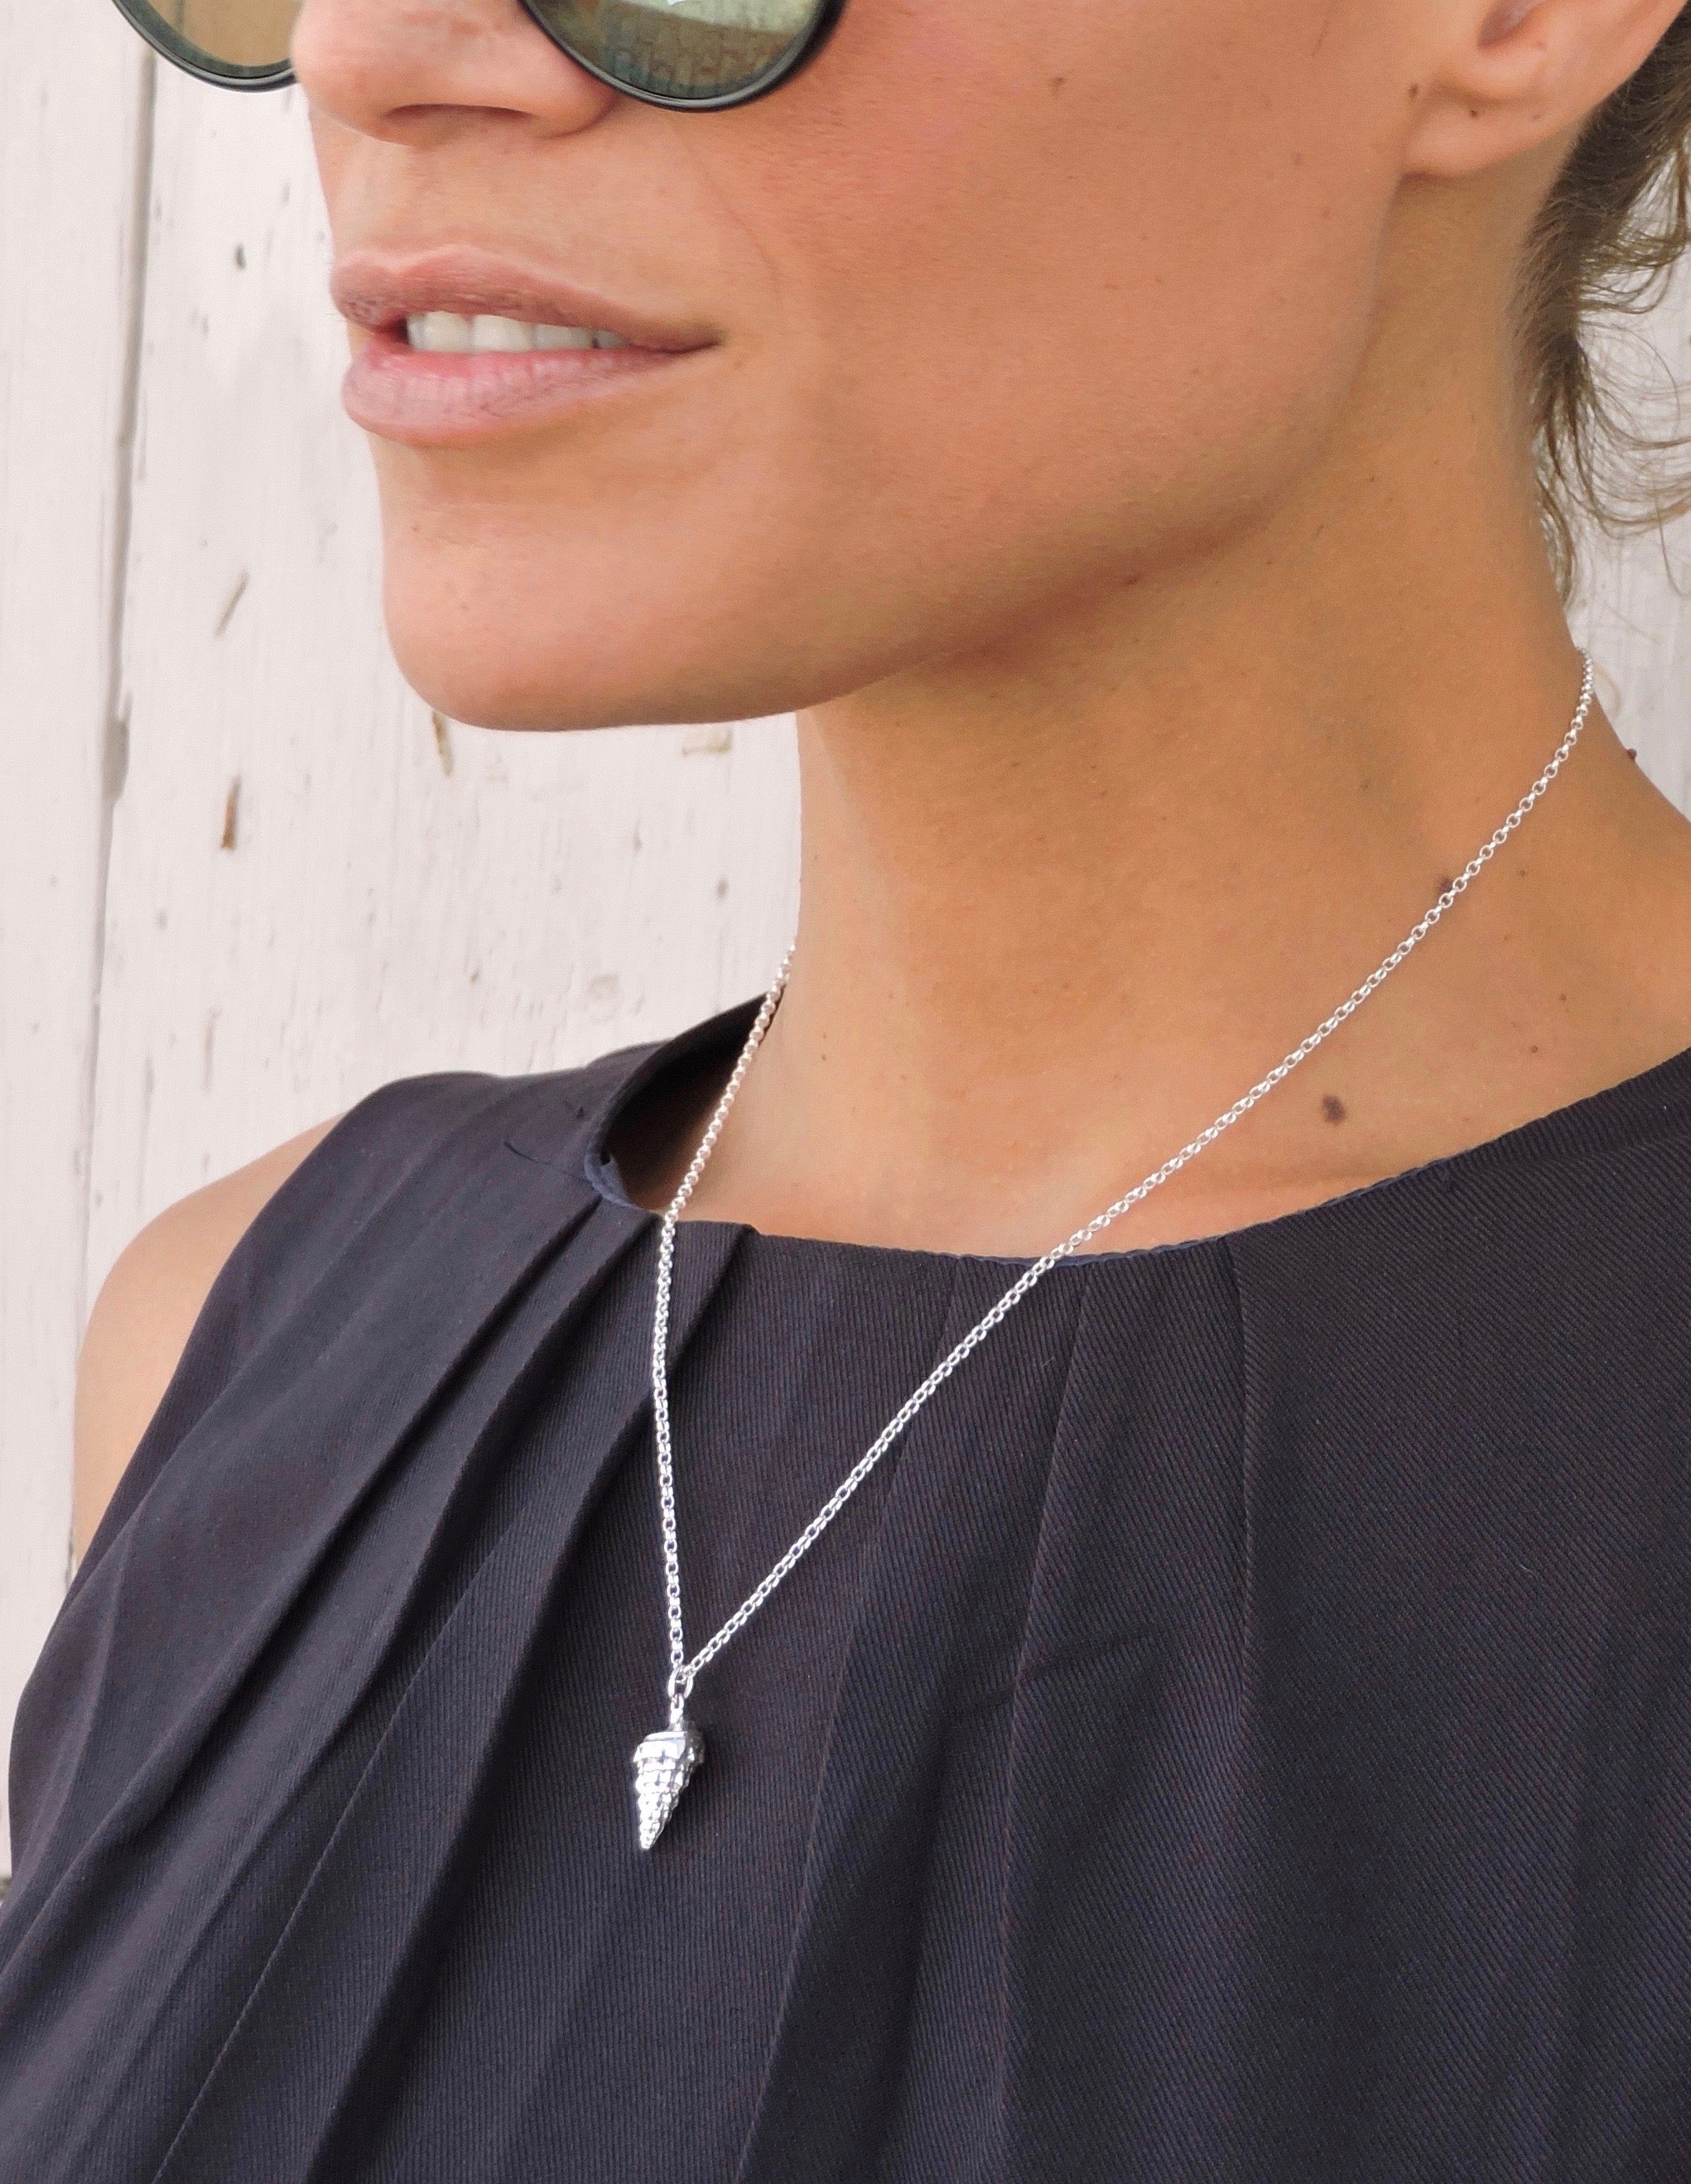 WHELK SHELL necklace - silver - Jennifer Kinnear Jewellery - Shell collection